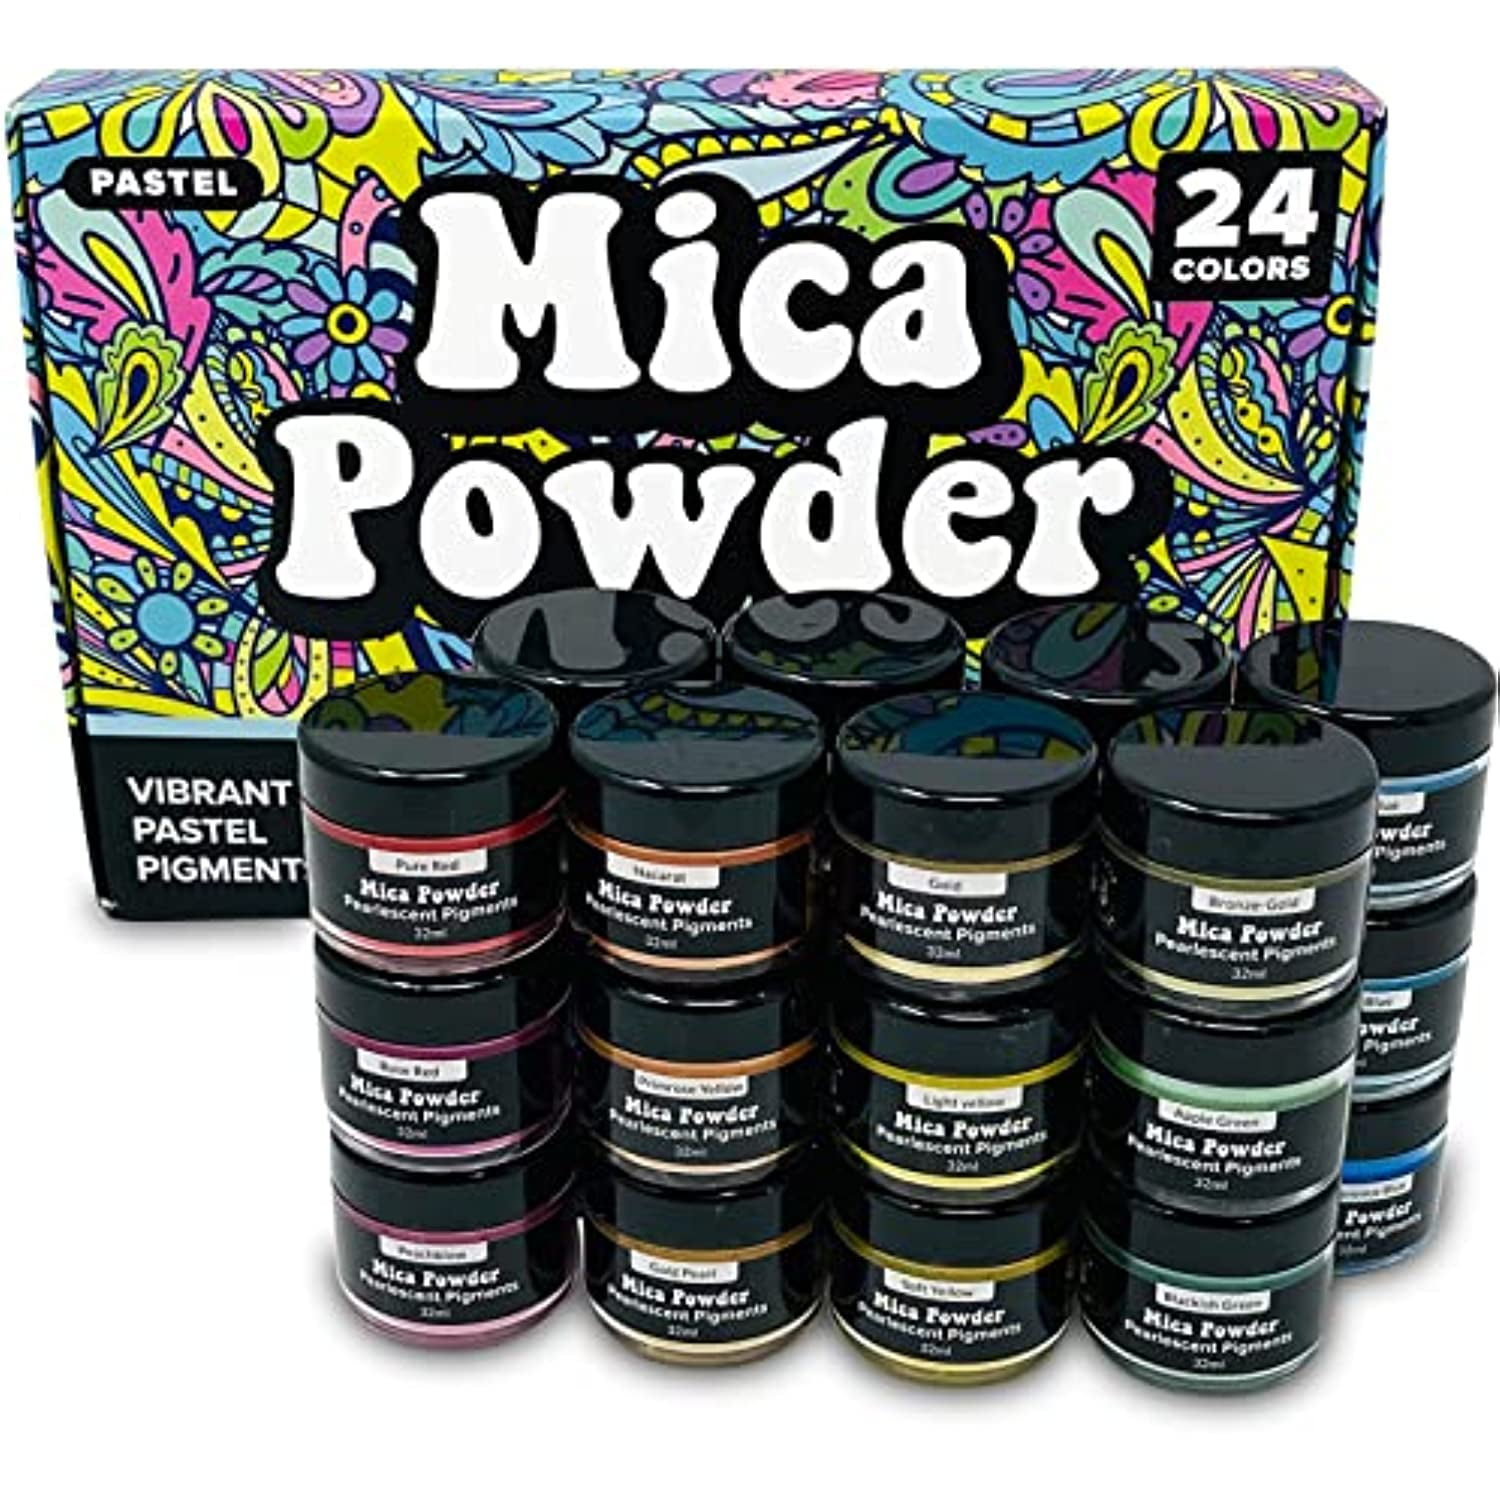 Mica Powder–Epoxy Resin Dye–Soap Dye Soap Colorant for Bath Bomb Dye Colorant– 36 Powdered Pigments Set – Mica Powder Organic for Soap